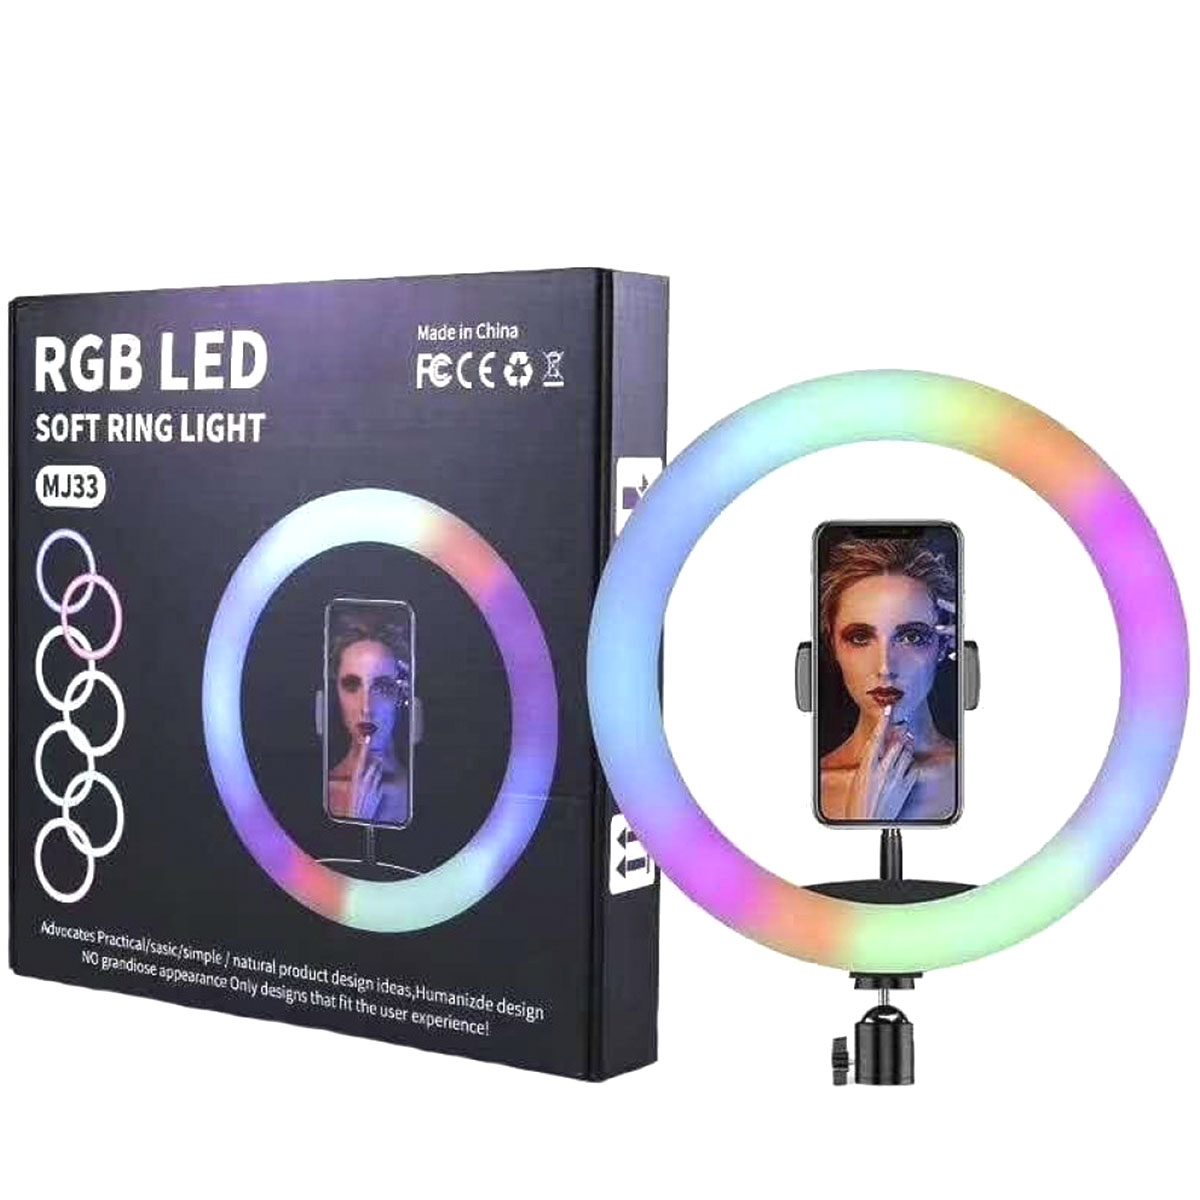 Цветная RGB кольцевая светодиодная лампа MJ33 - 33 см, со штативом 1.9 м